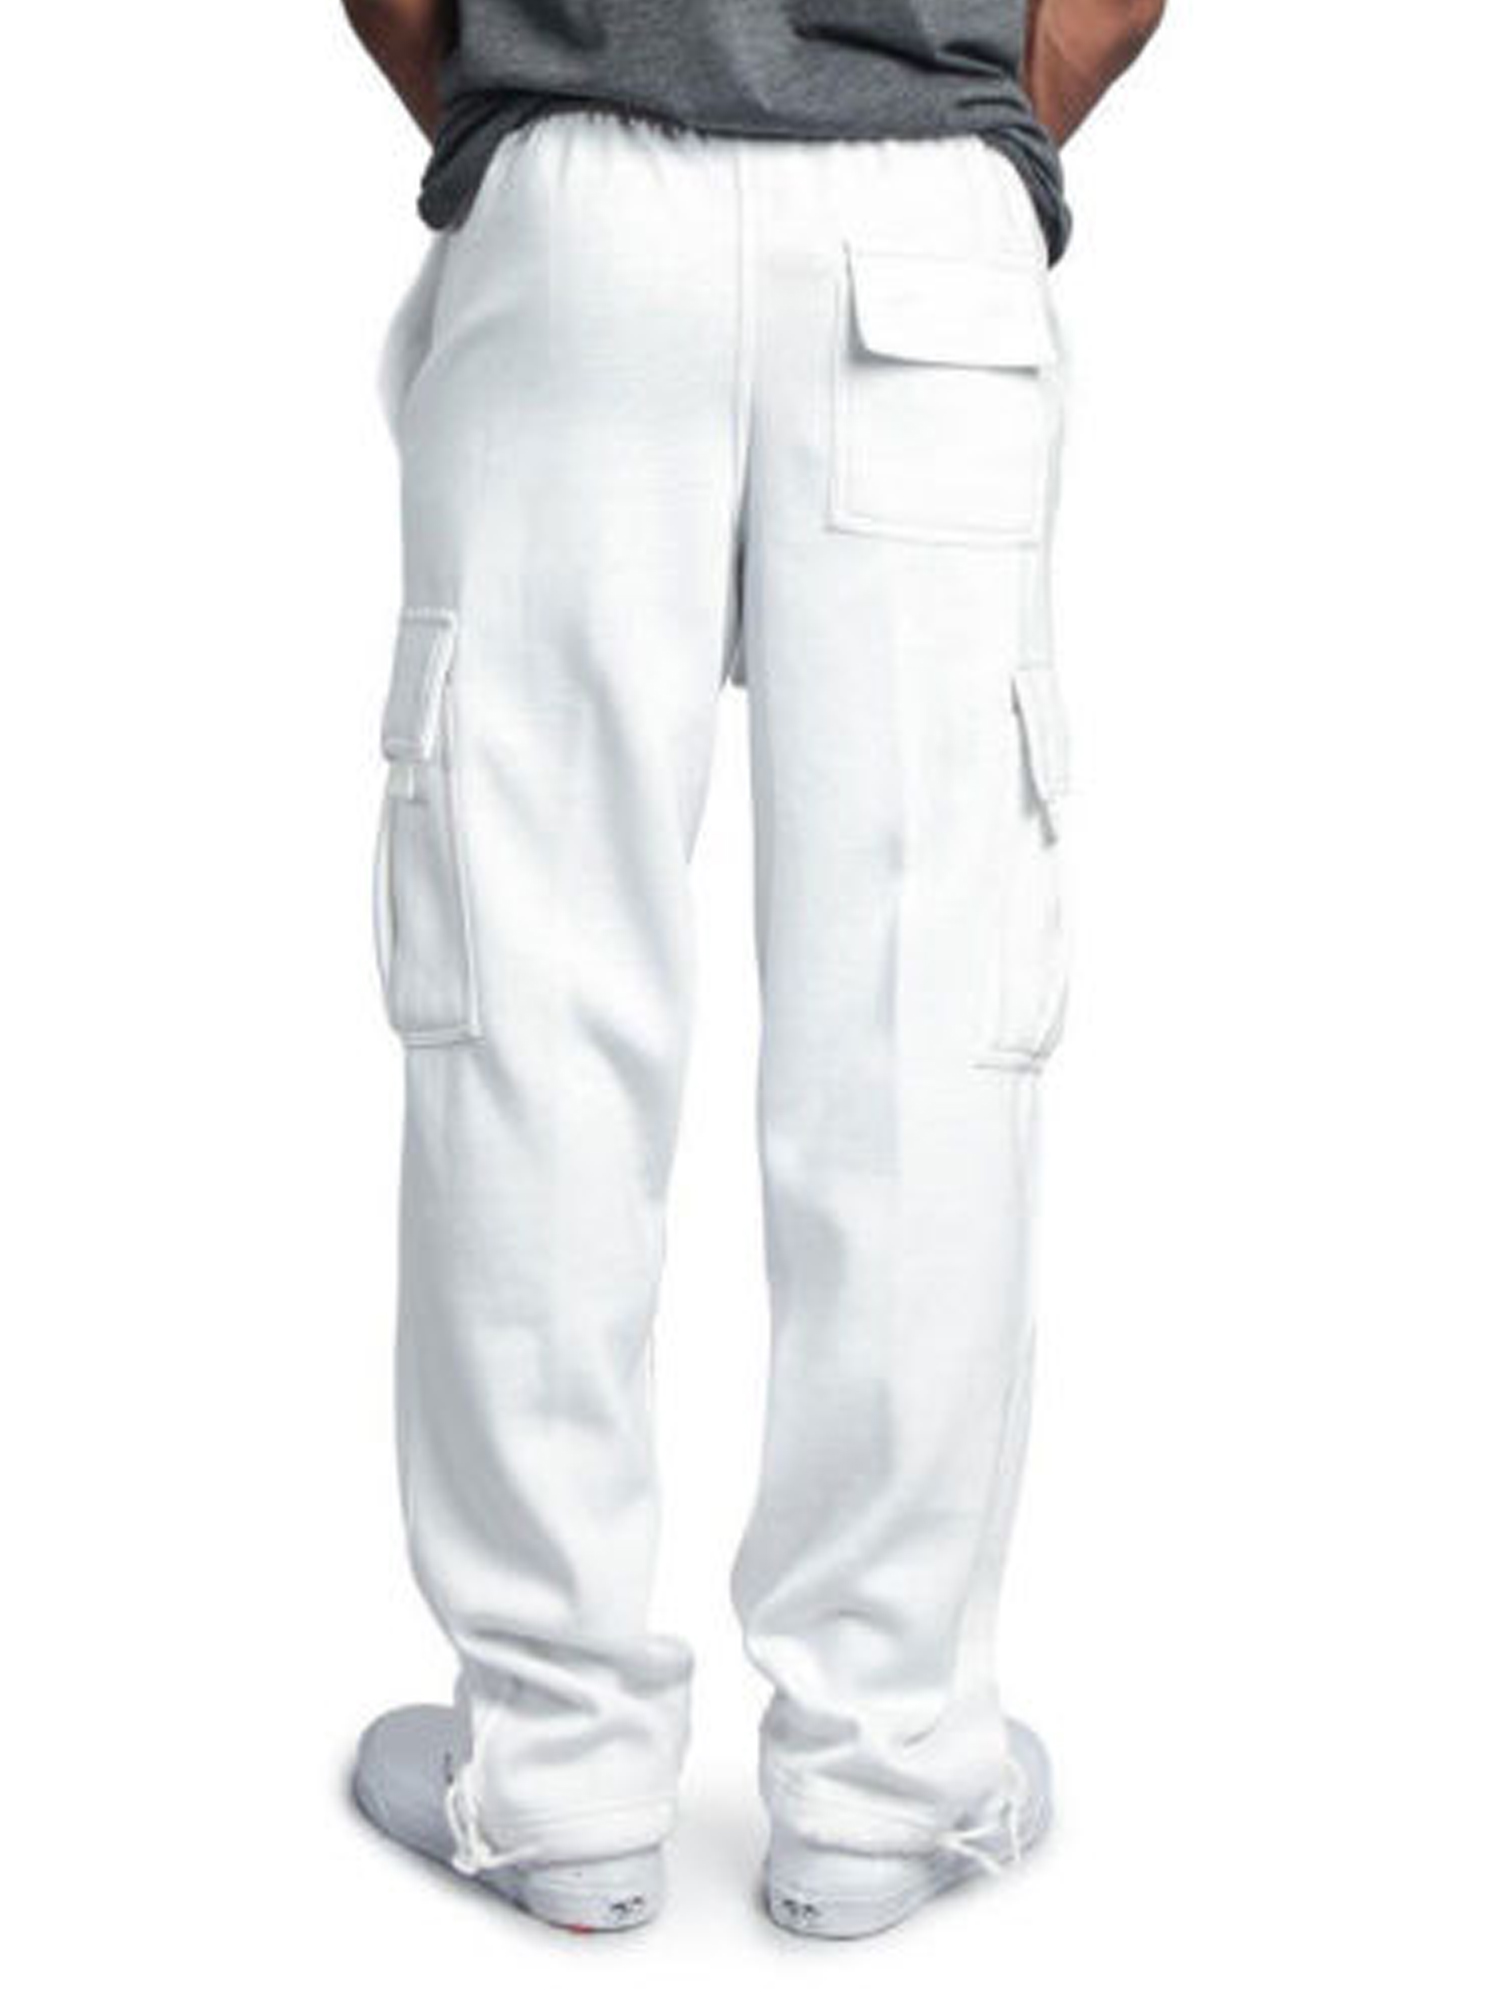 Nituyy Men Cargo Jogger Sweatpants with Pocket Athletic Pants - Walmart.com